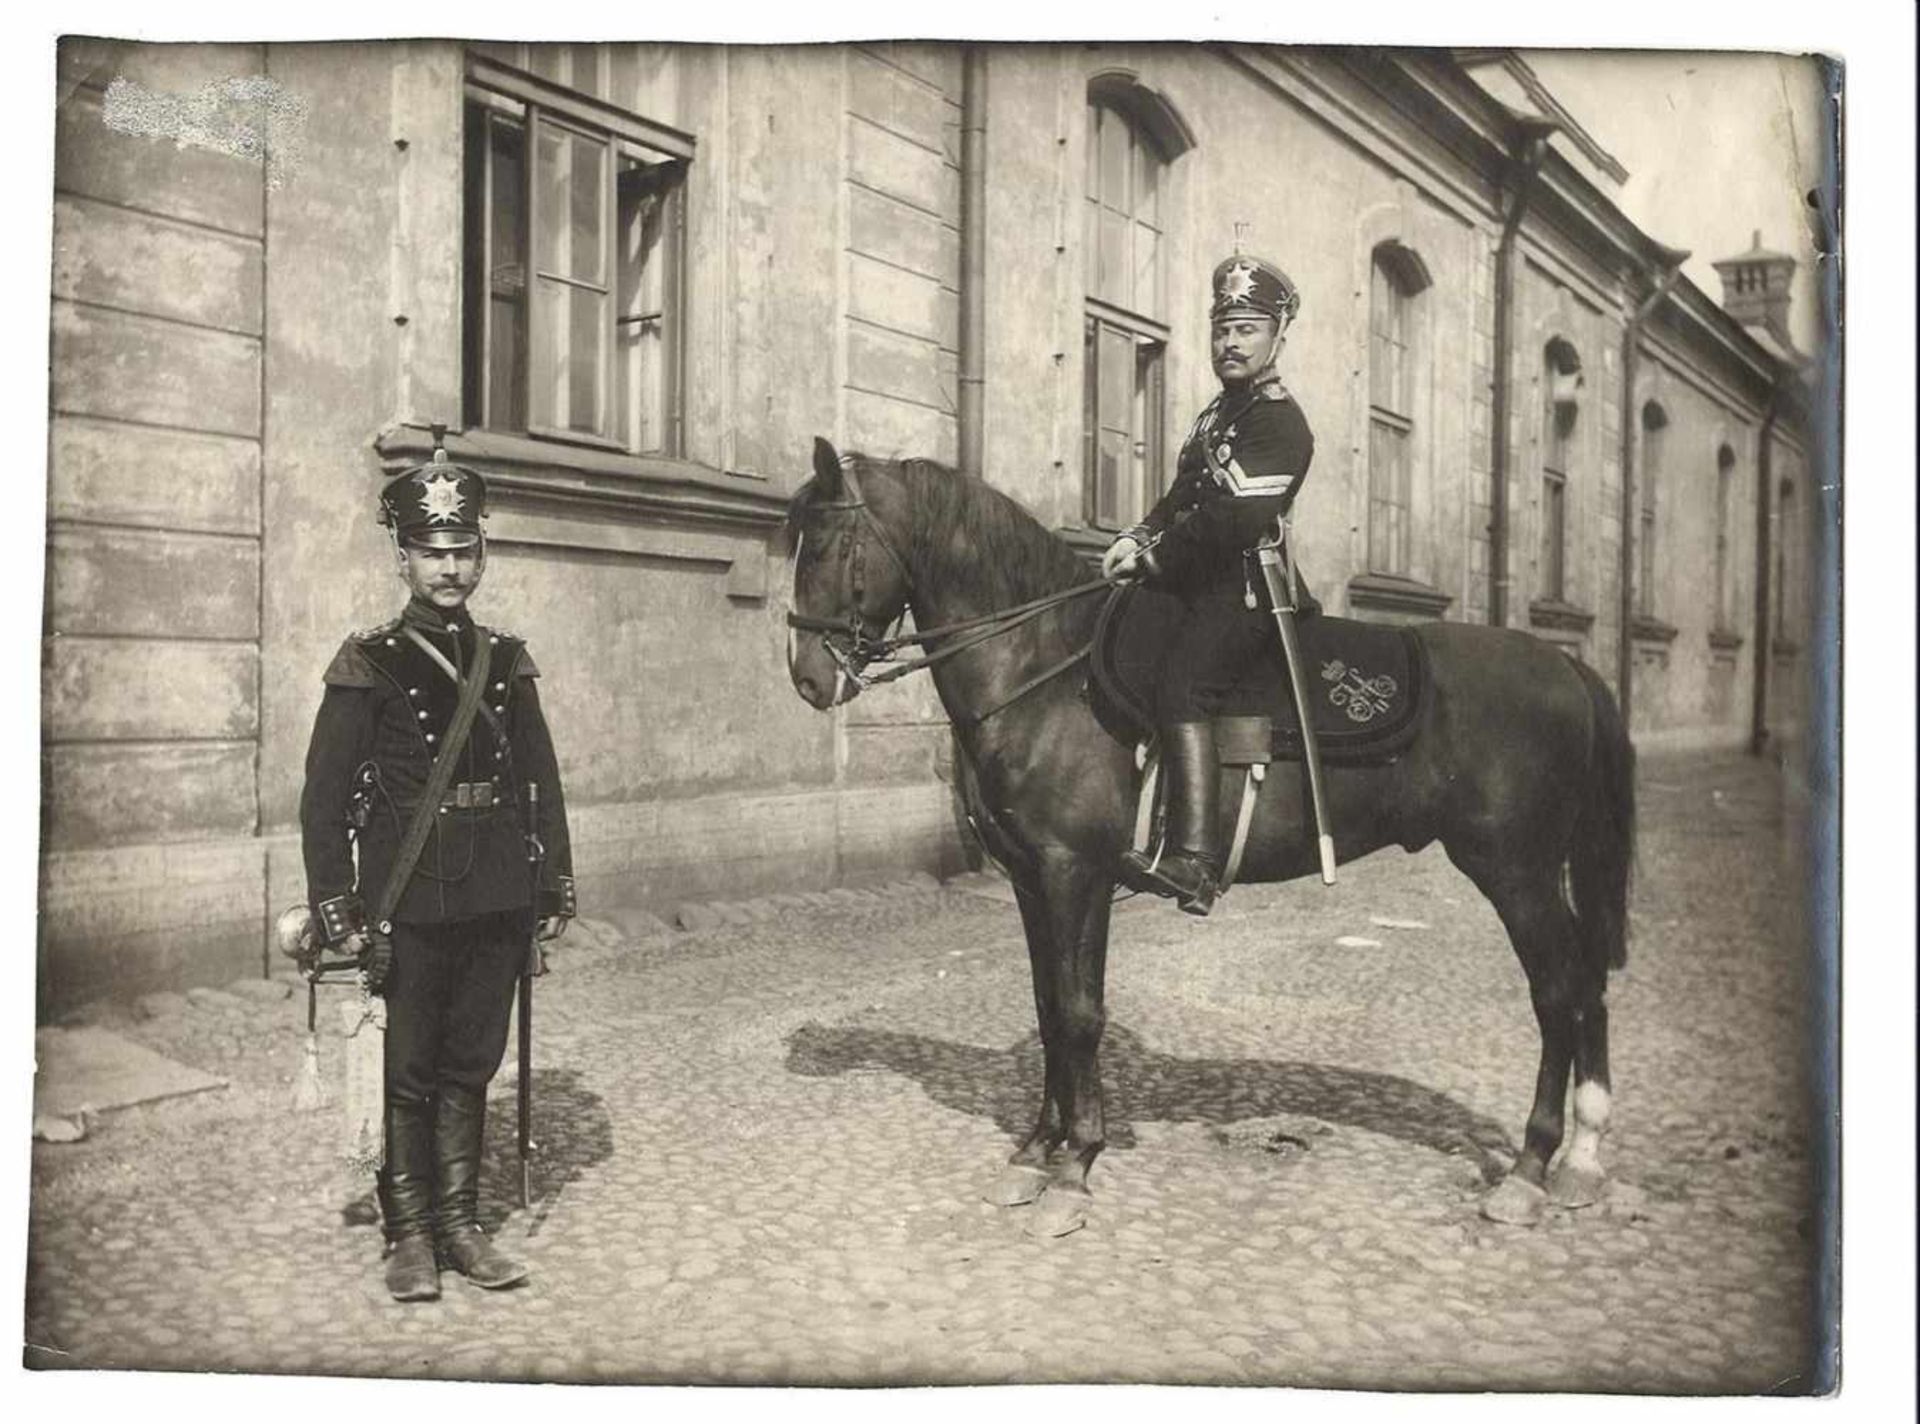 Karl Bulla. Lower ranks of the Life Guards Horse Artillery. Photograph. 1900s. 17x23 cm. Gelatin